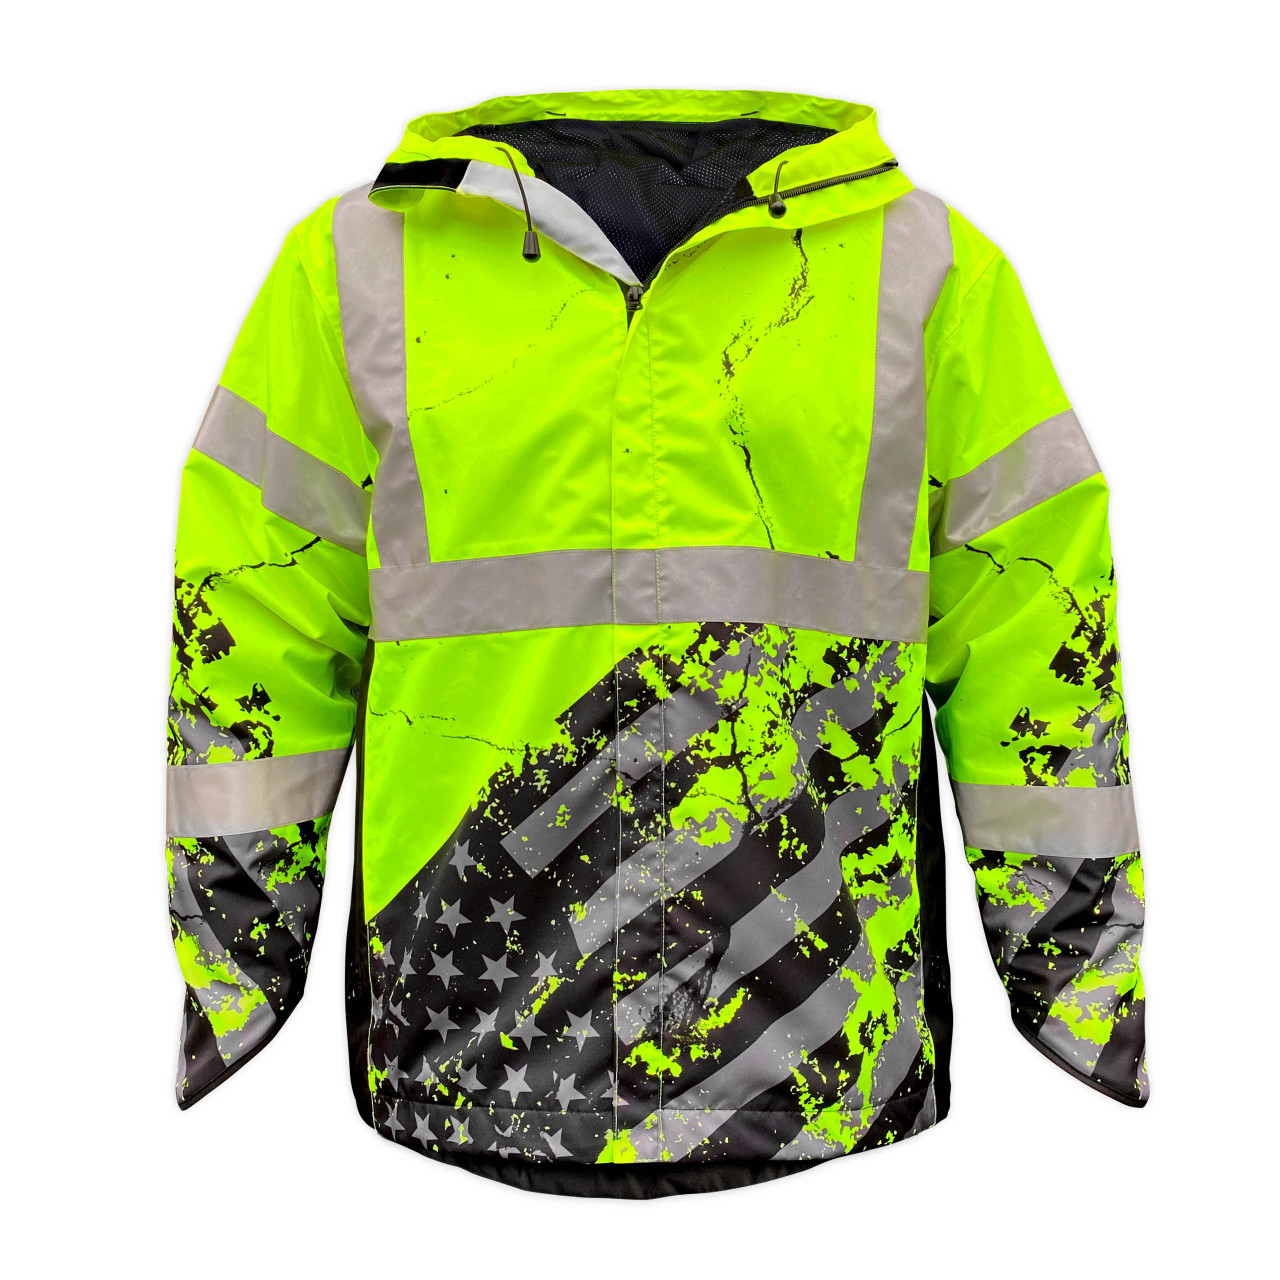 American Grit Yellow Class 3 Reflective Safety Rain Jacket